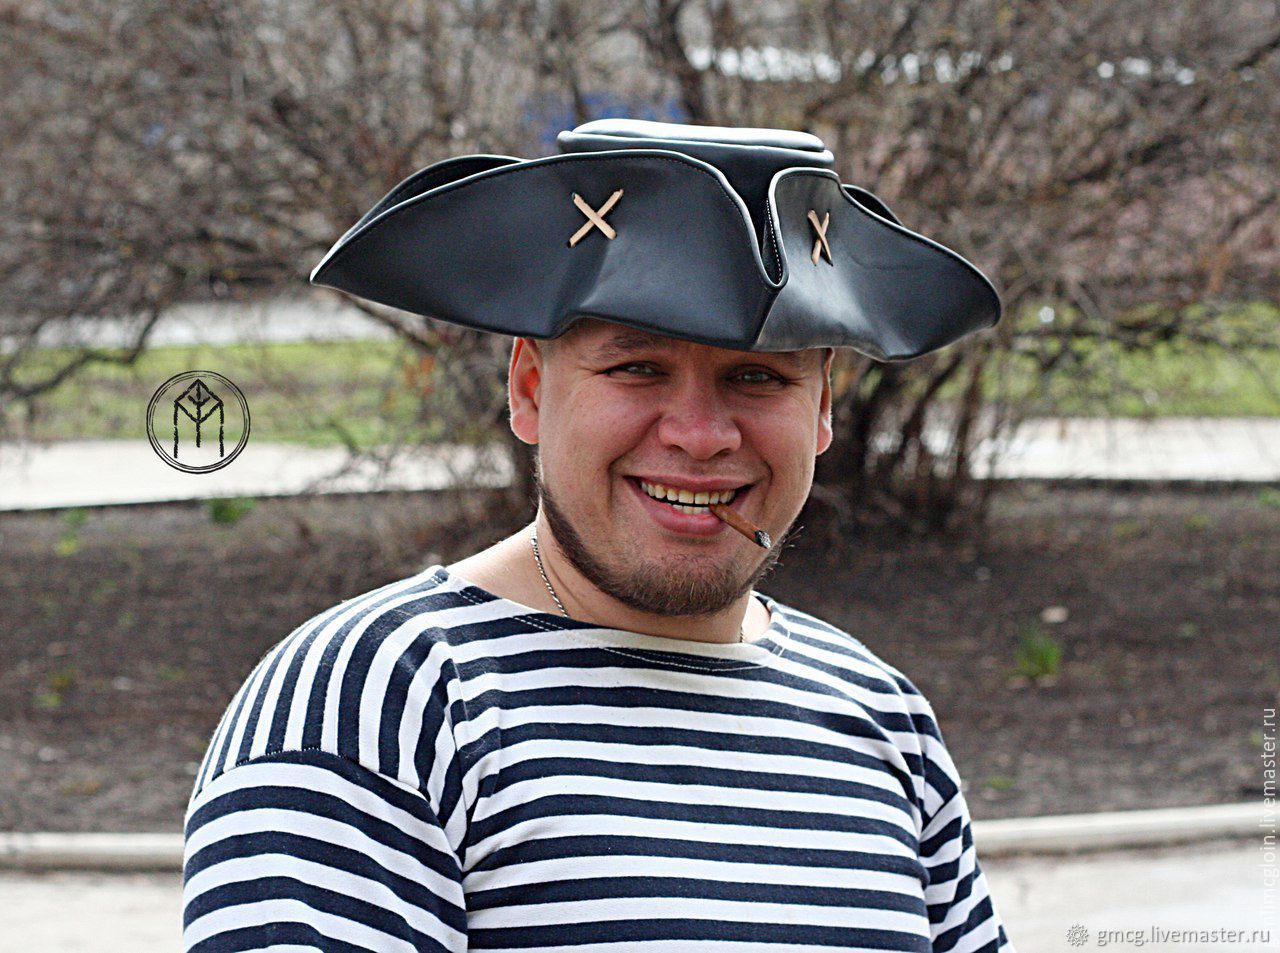 Jack Sparrow cocked hat (black), Hats1, Tolyatti,  Фото №1